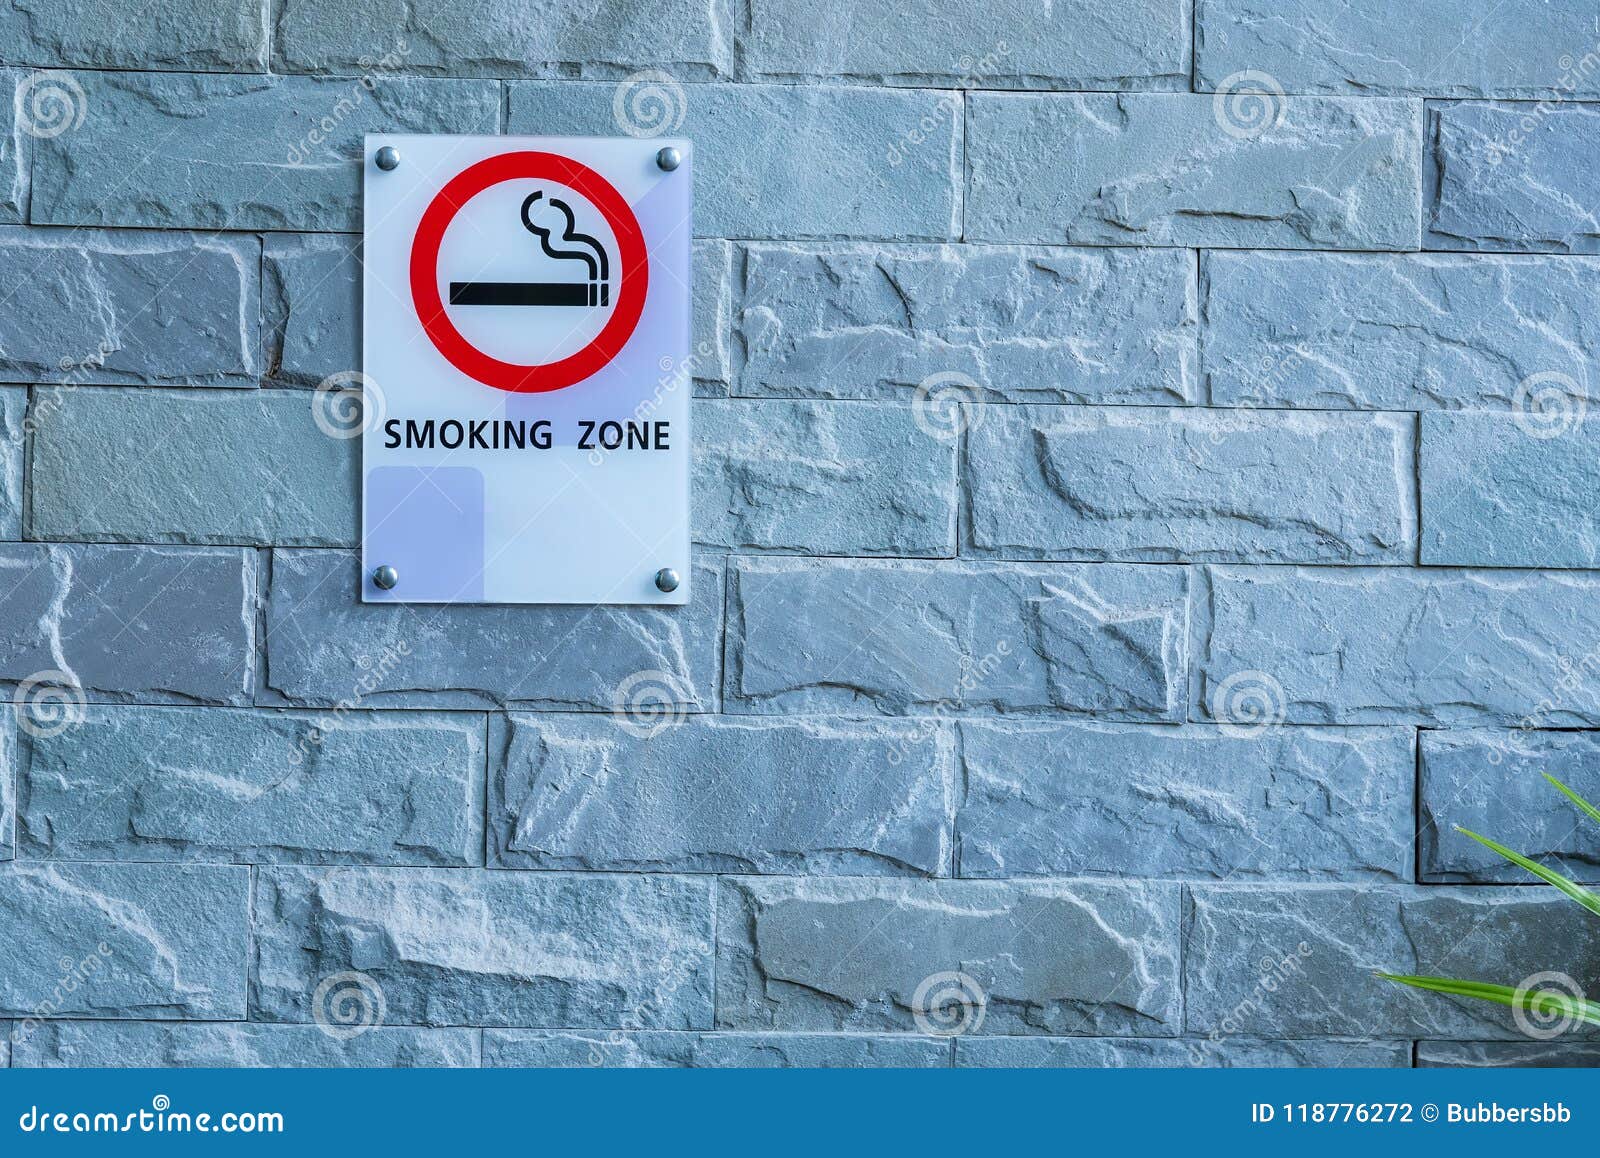 Smoking Area Sign of D Varee Diva Kiang Haad Beach Hotel Hua Hin City Prachuab Thailand Stock Photo - Image of cigarette, 118776272